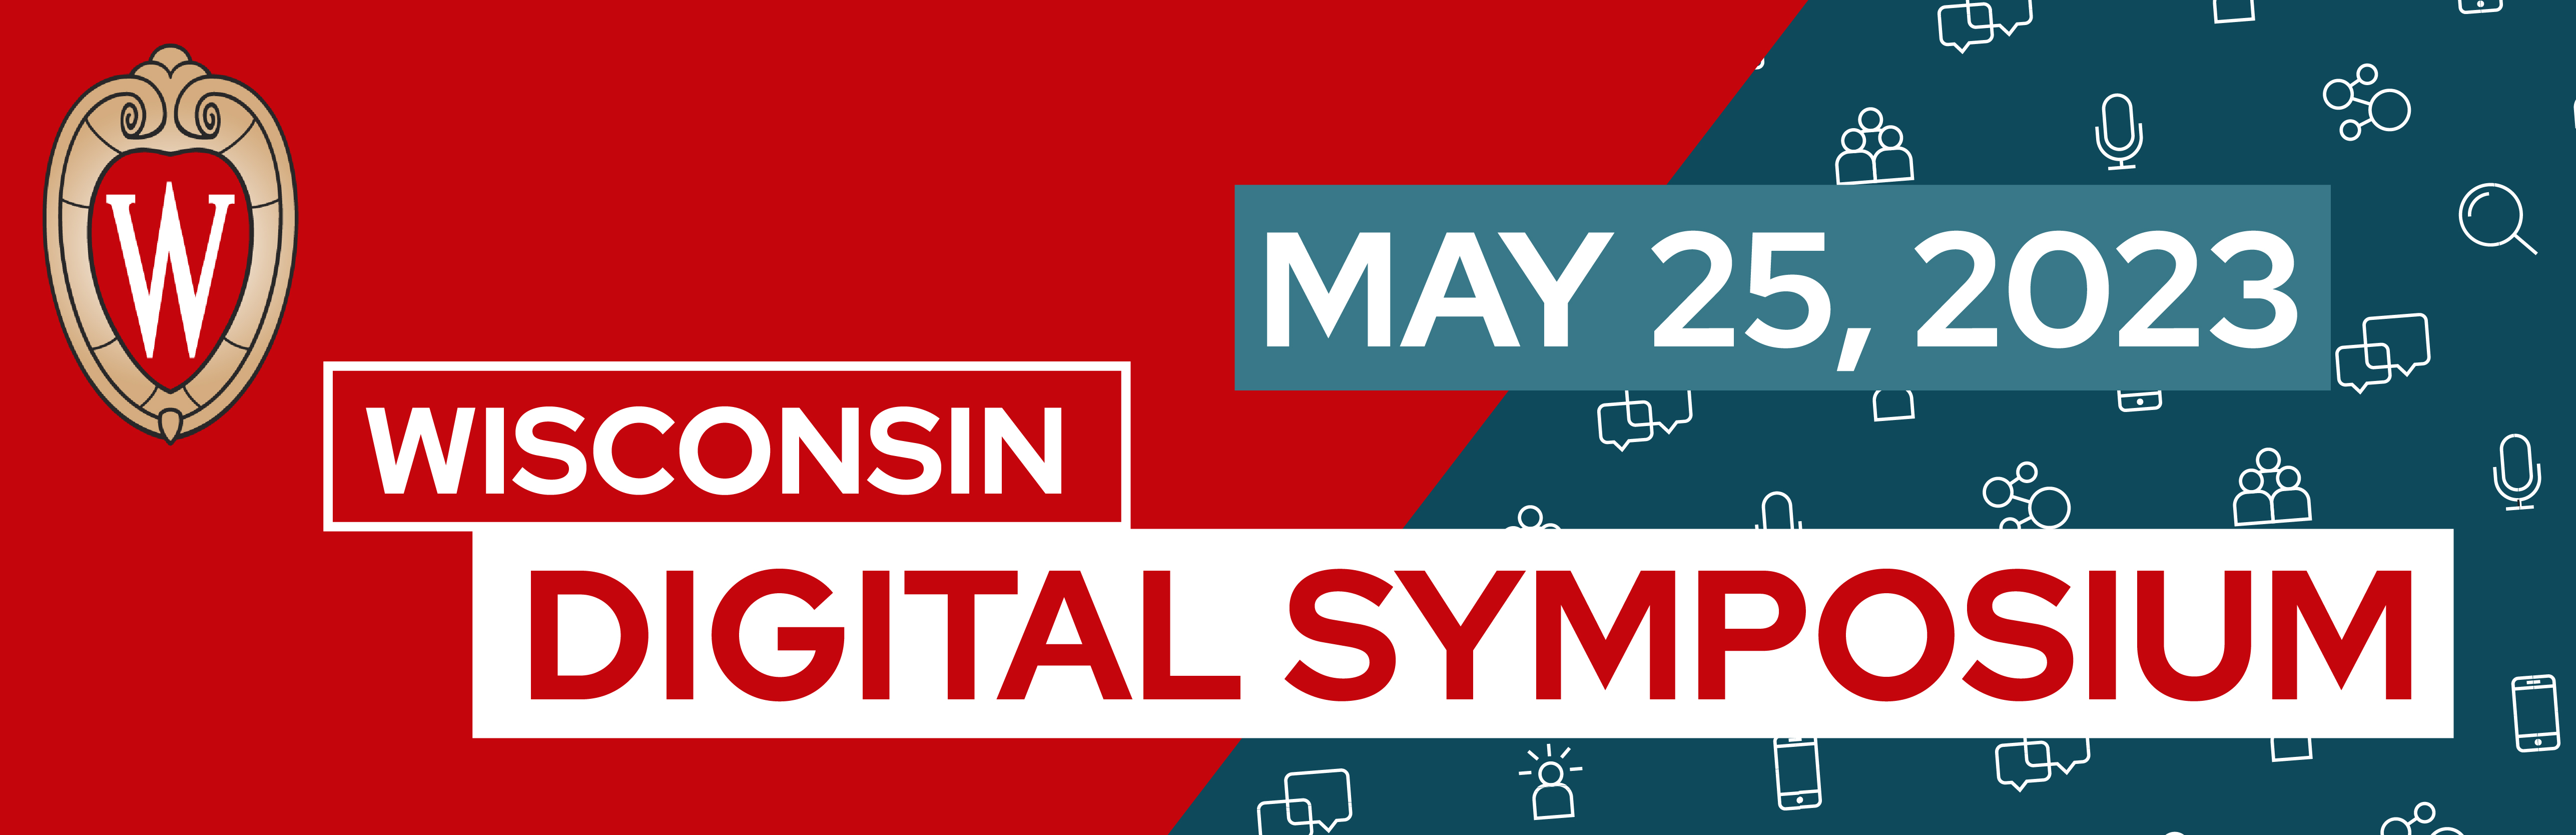 Digital Symposium May 25 2023